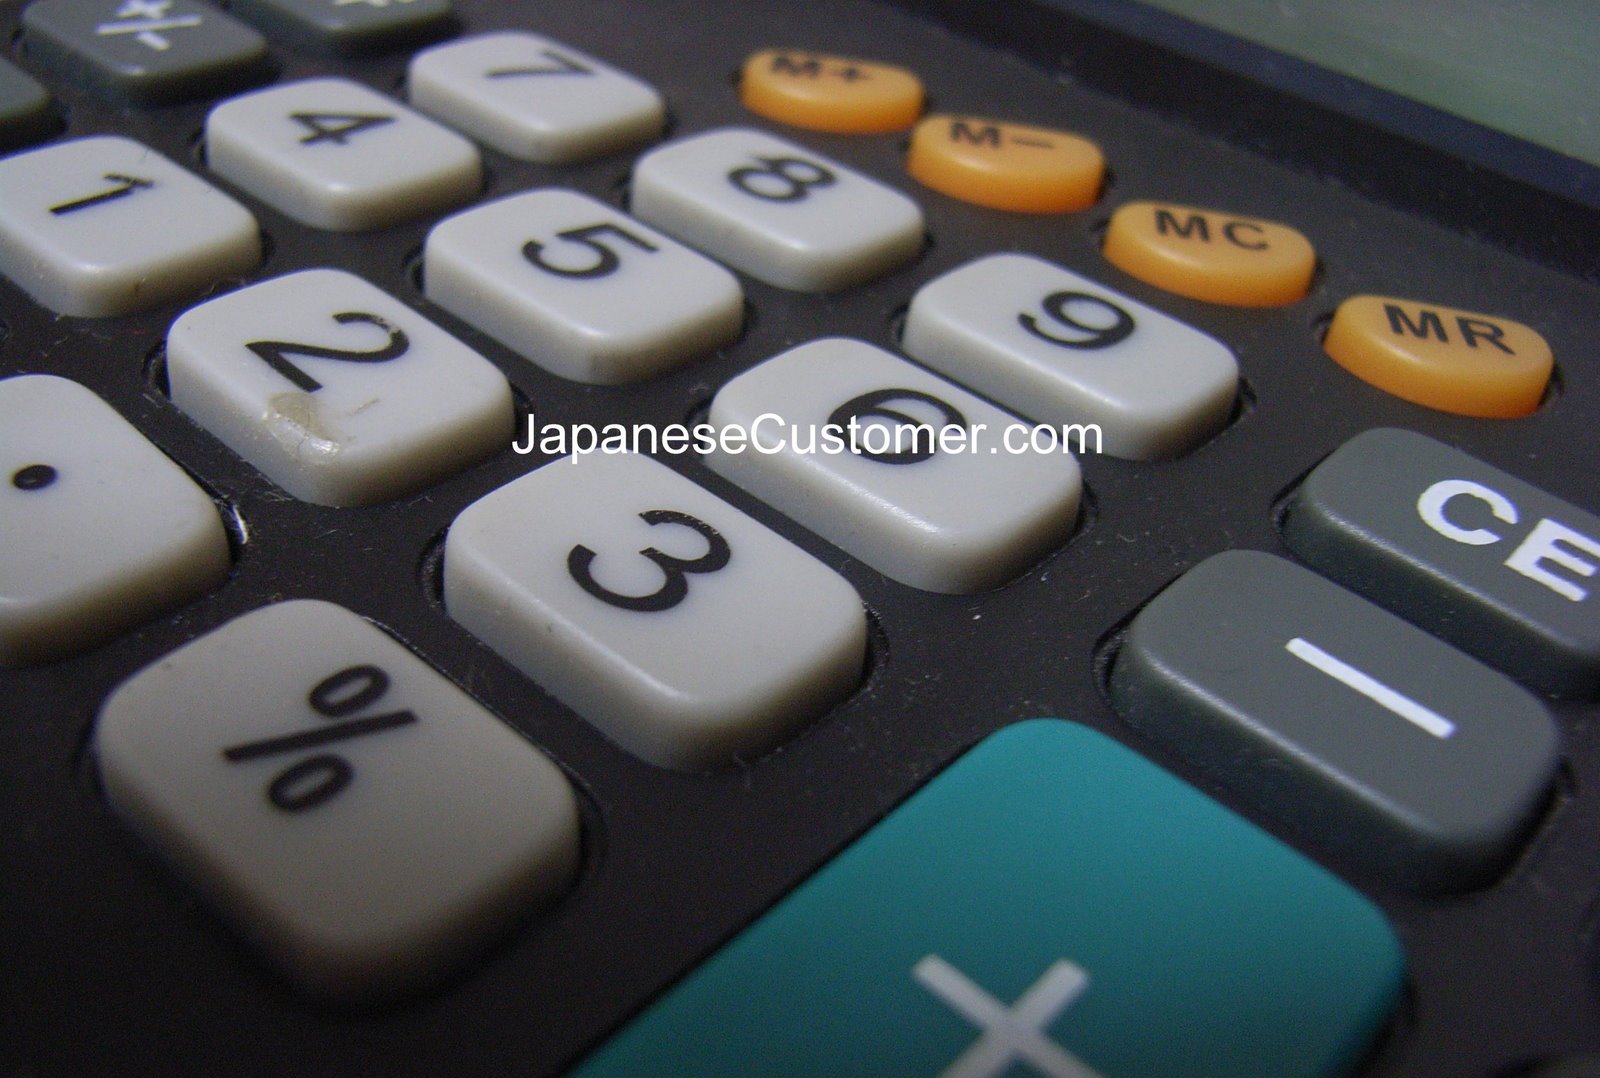 Japanese calculator Copyright Peter Hanami 2014